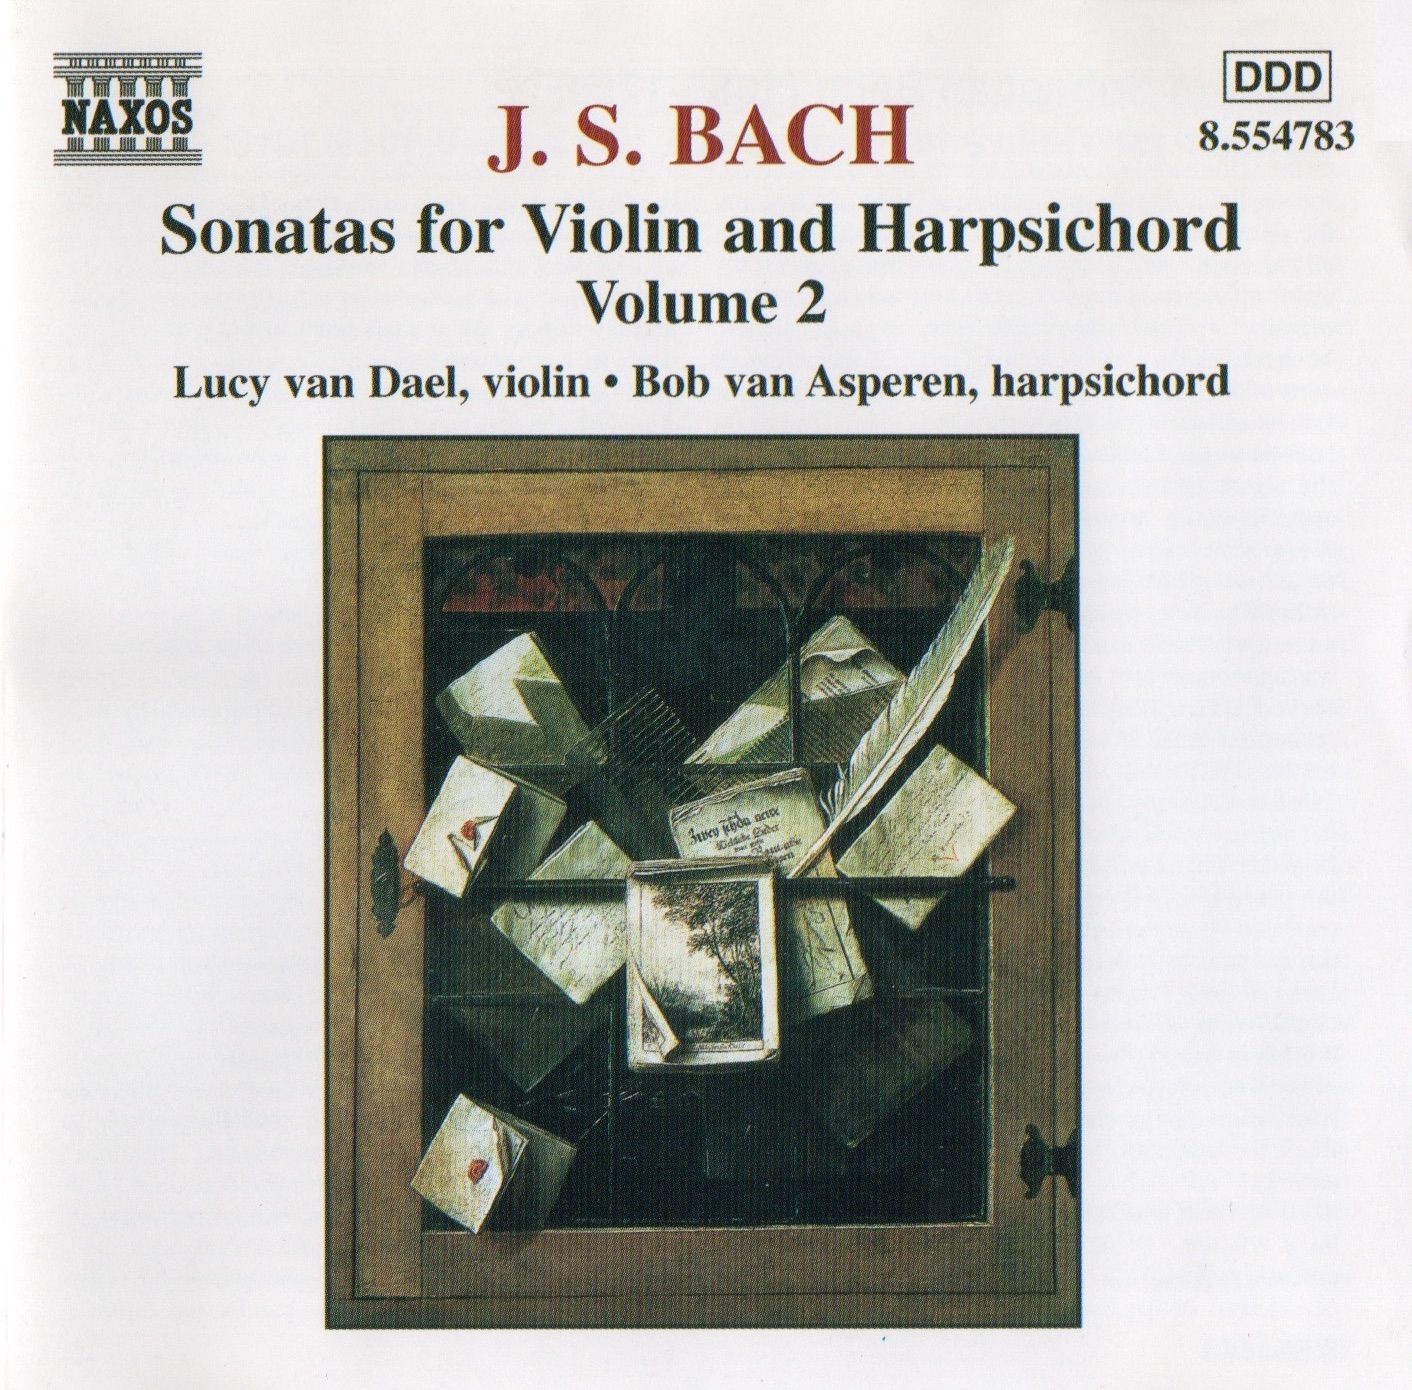 Six Sonatas for Harpsichord and Violin